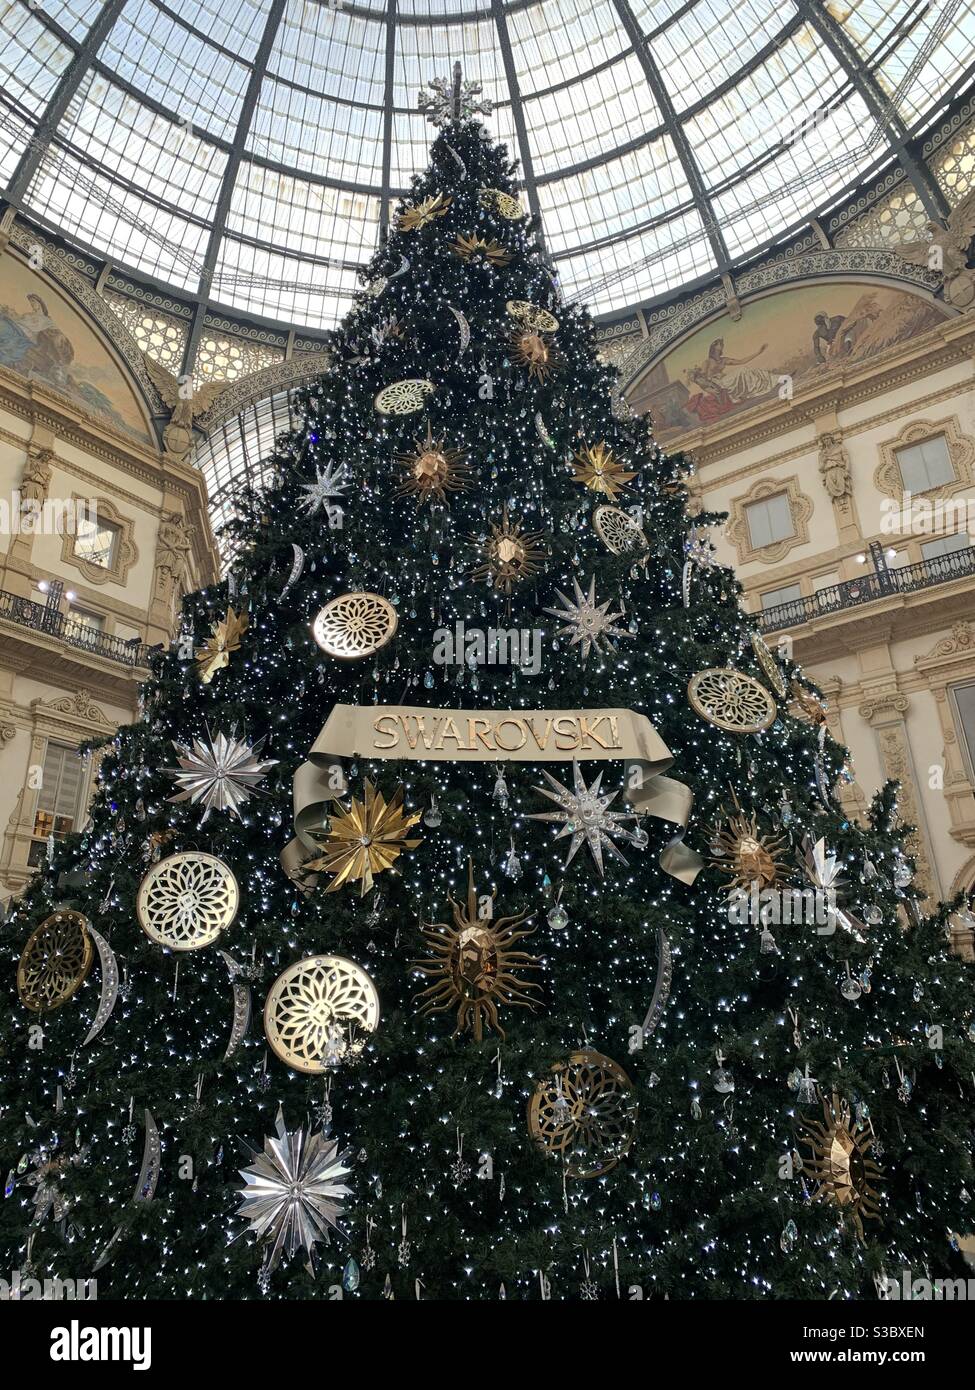 Arbre de Noël SWAROVSKI dans la galerie Vittorio Emanuele II Milan, Italie Banque D'Images